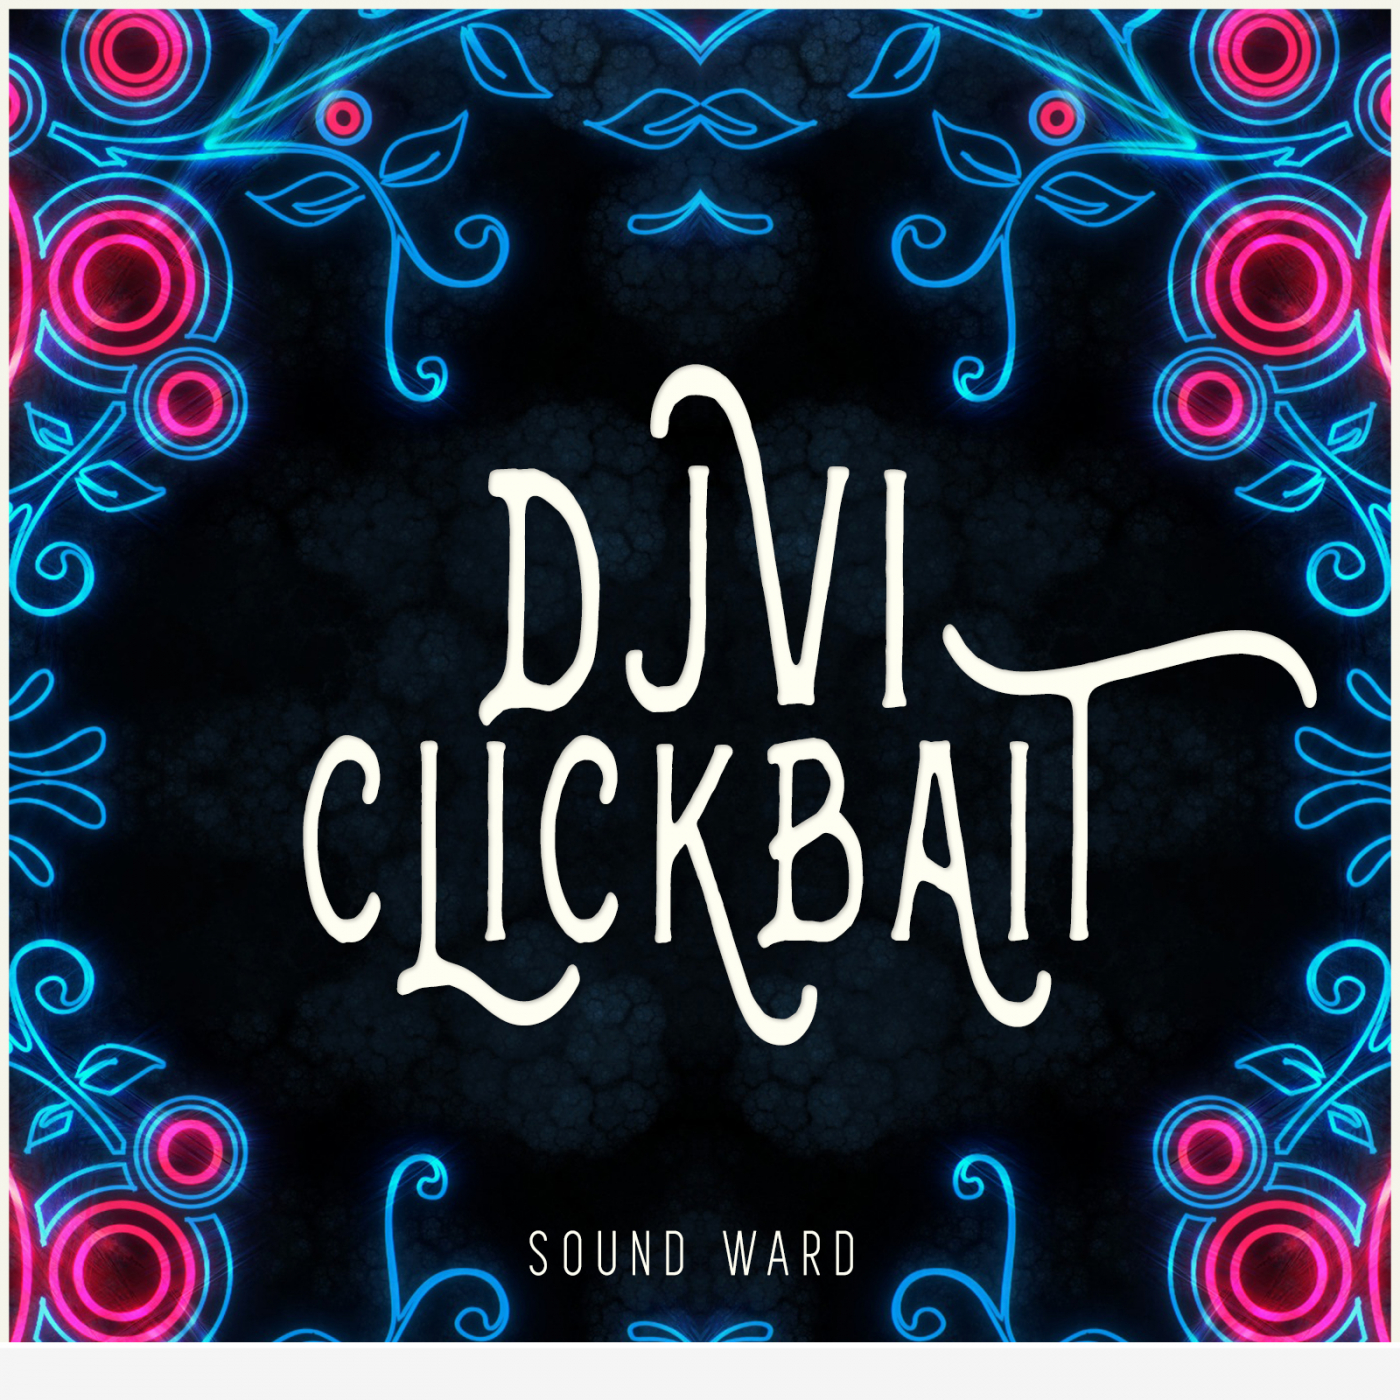 Clickbait (Original Mix)